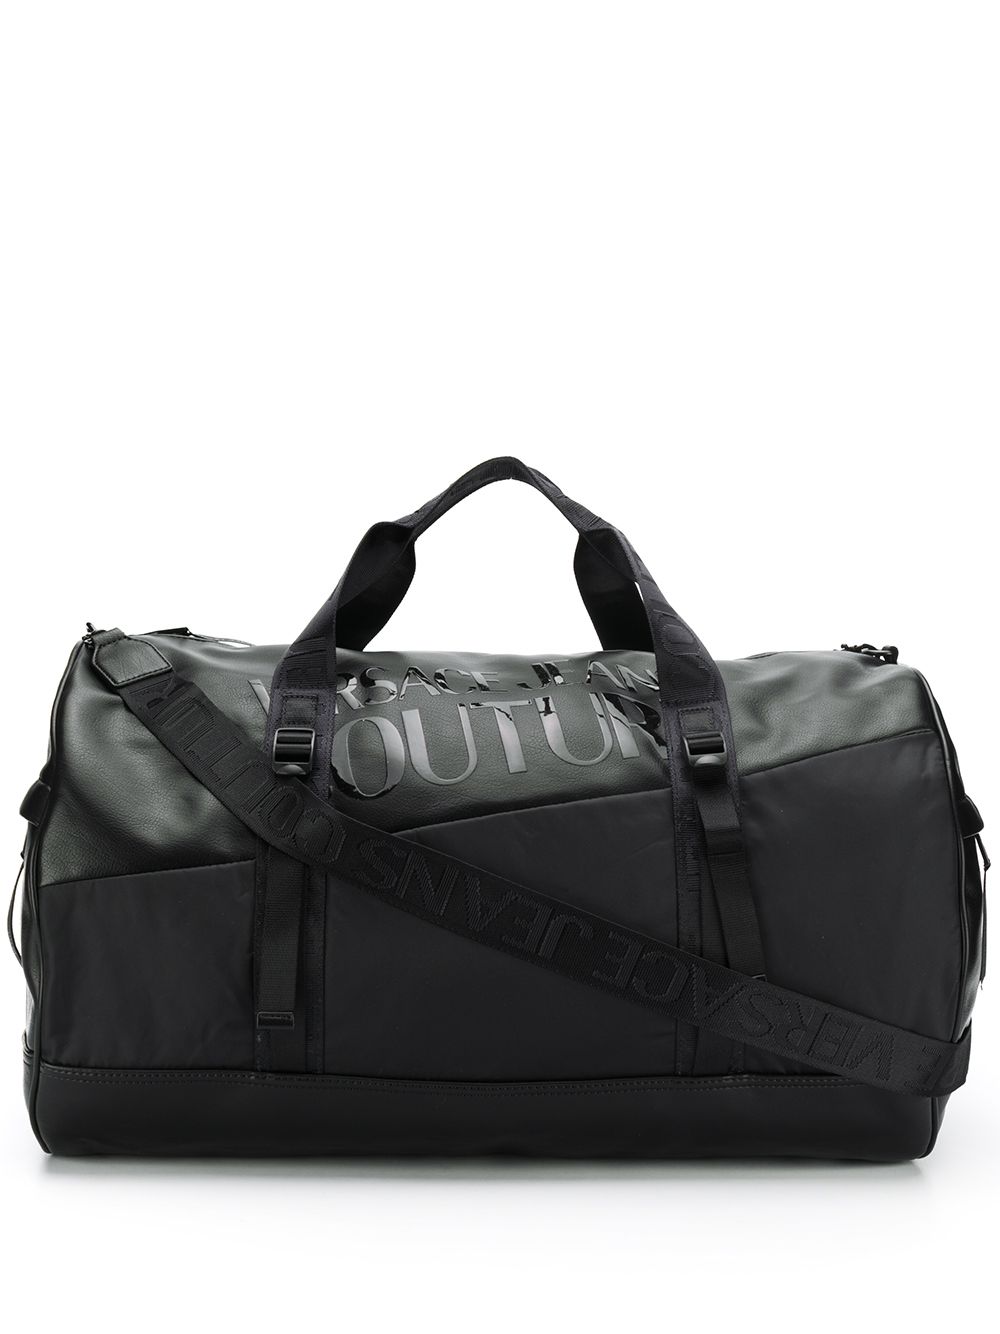 фото Versace Jeans Couture дорожная сумка с логотипом